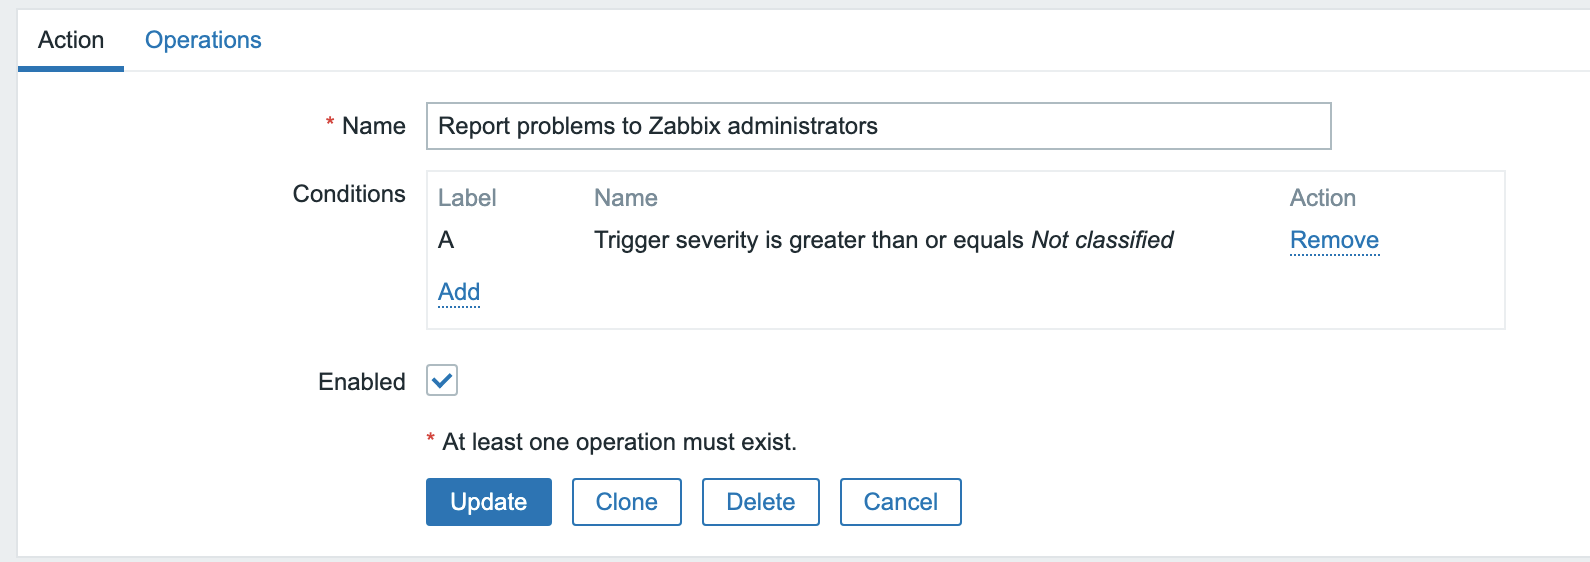 Enable Report problems to Zabbix administrators